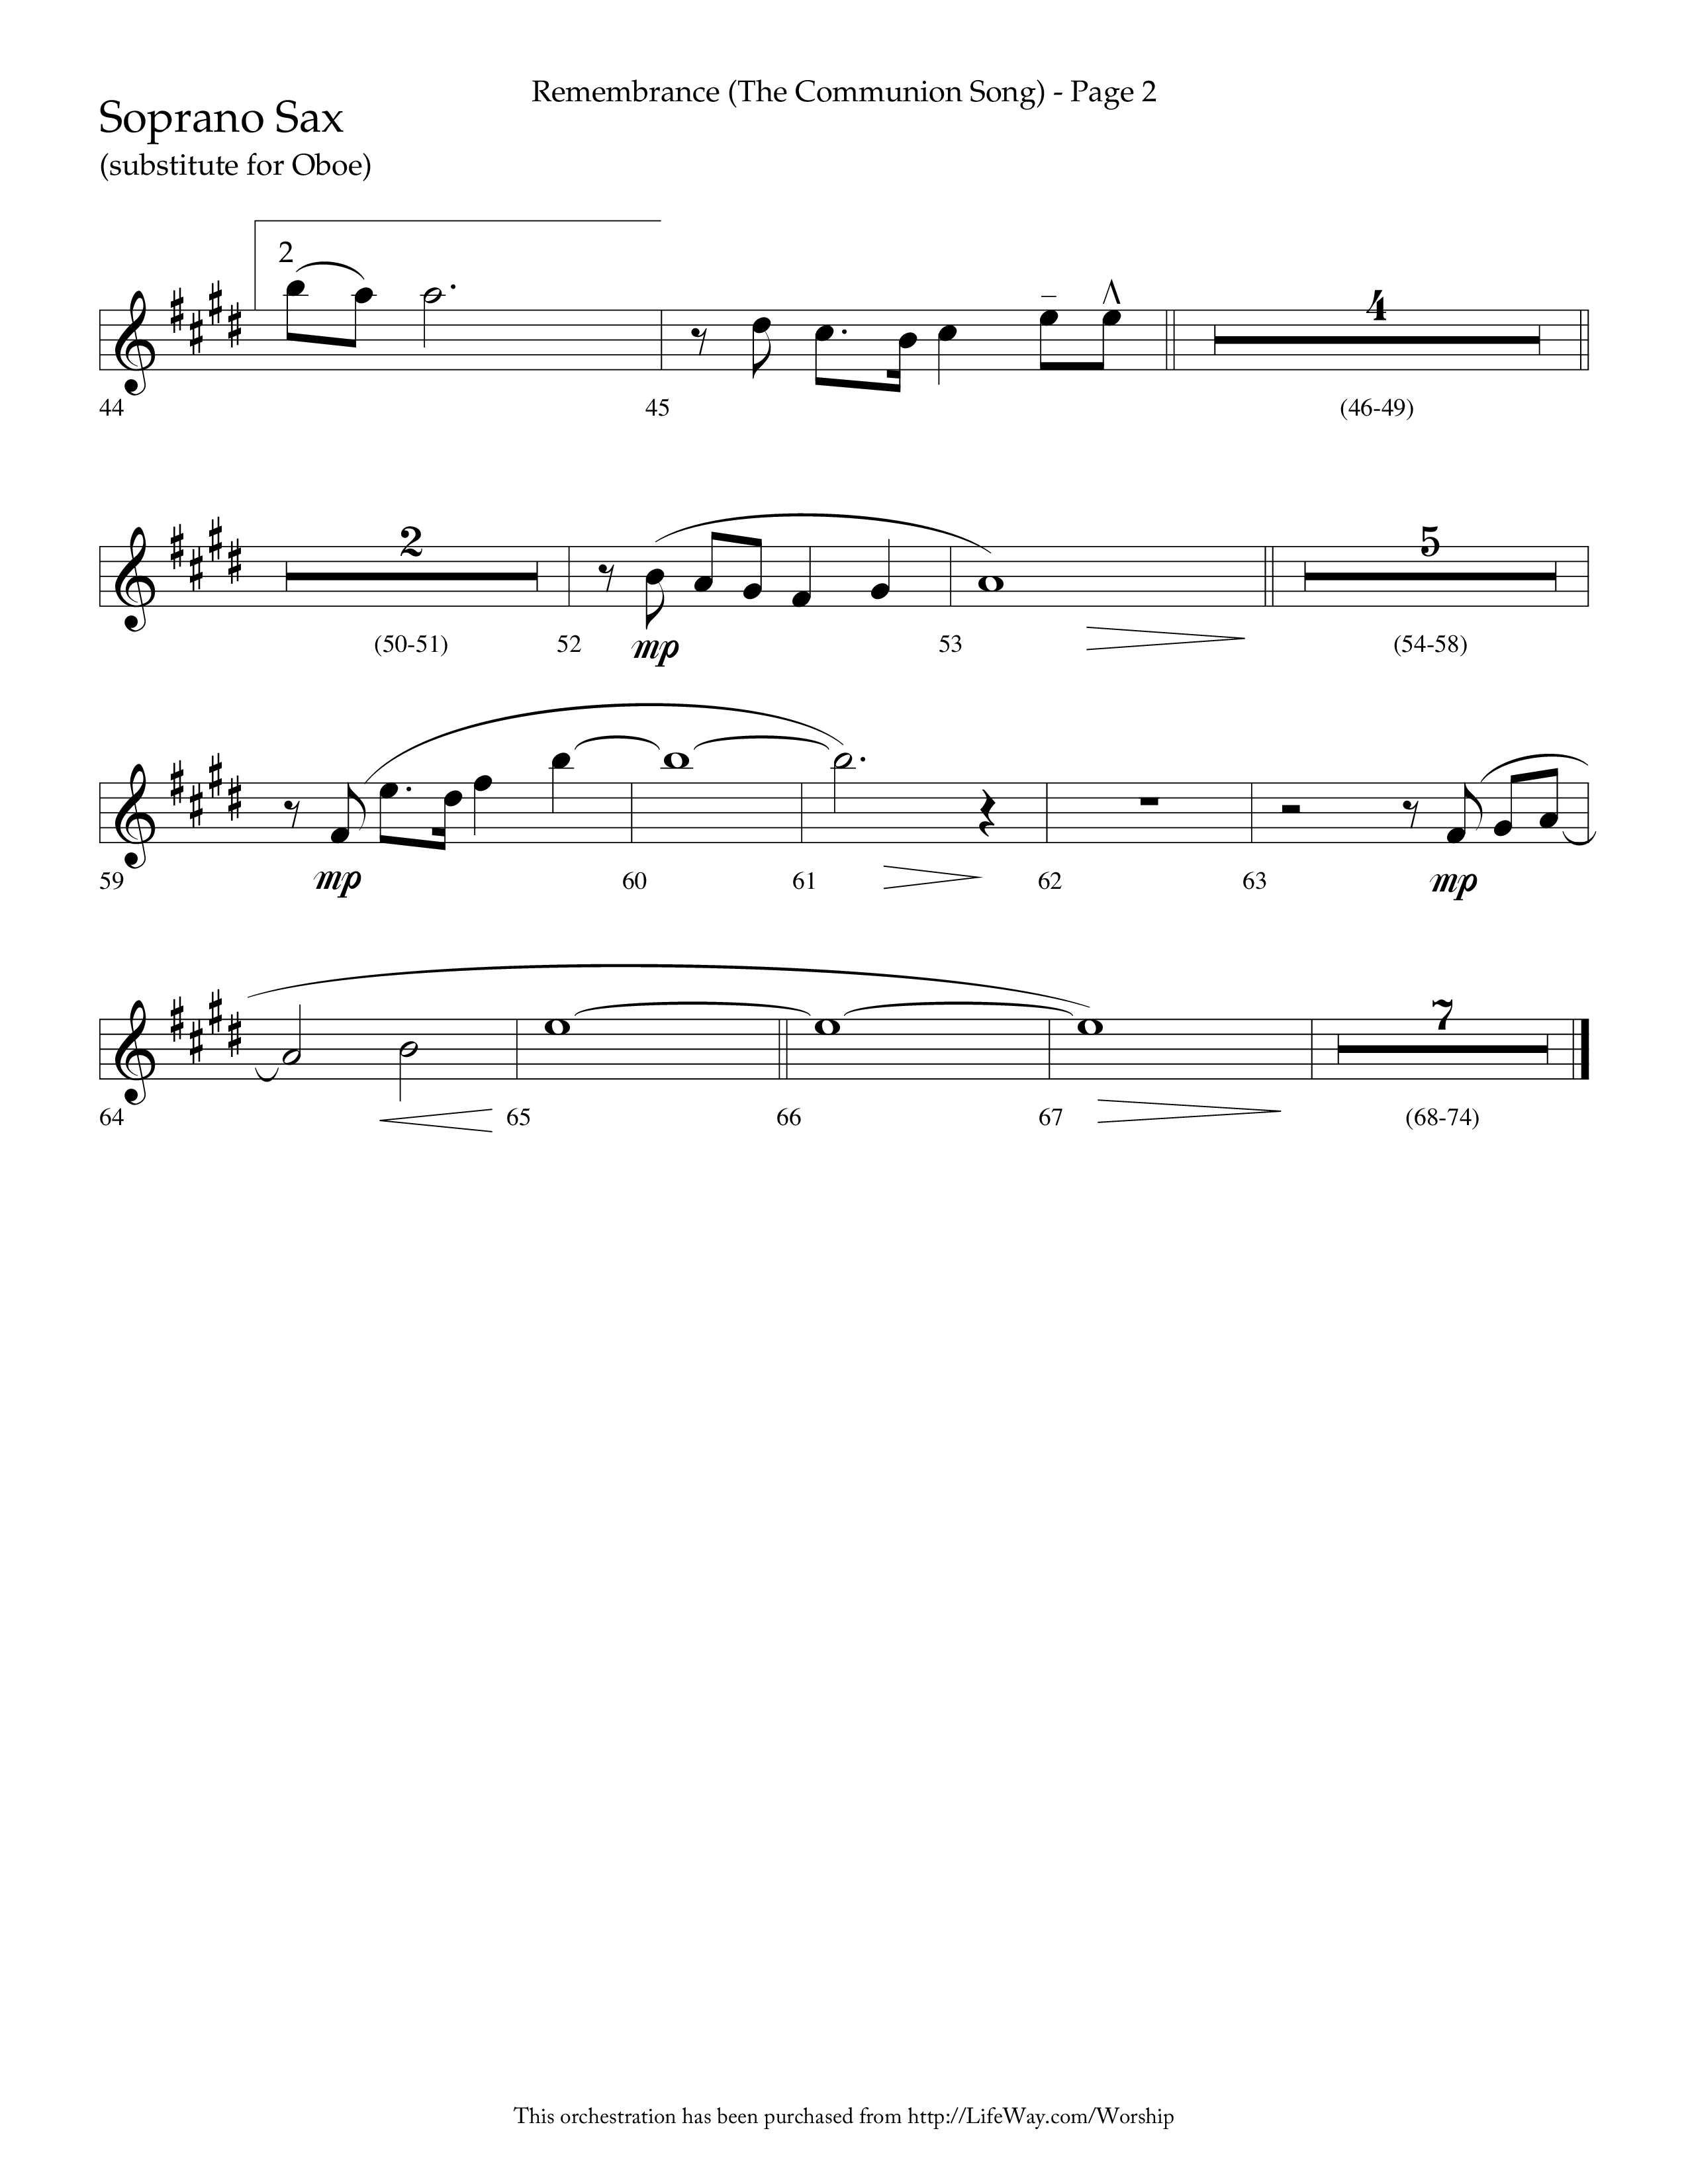 Remembrance (Choral Anthem SATB) Soprano Sax (Lifeway Choral / Arr. Charlie Sinclair / Arr. Carol Tornquist / Orch. Danny Zaloudik)